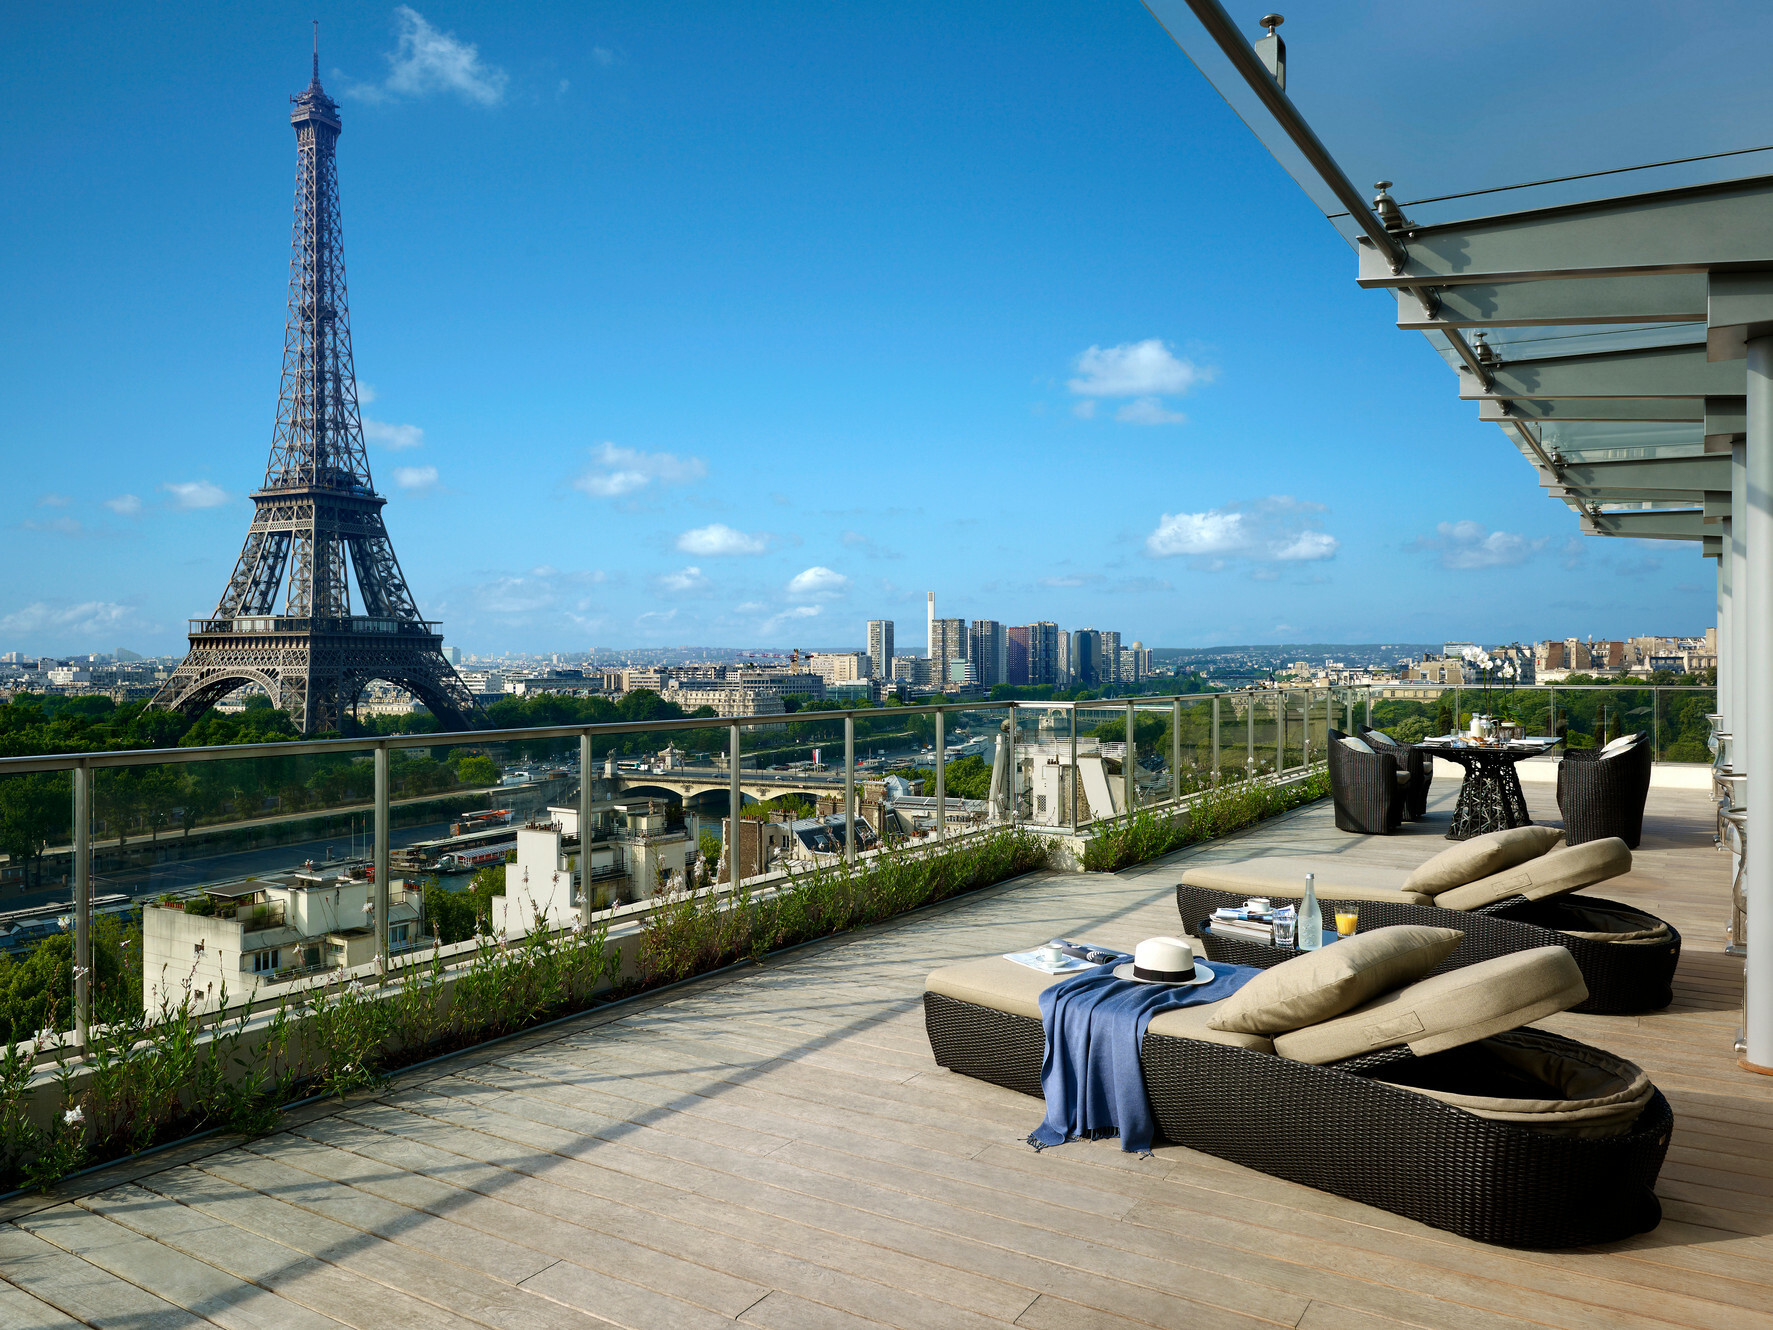 Paris Hotels With Views Of Eiffel Tower - Shangri La Hotel Paris